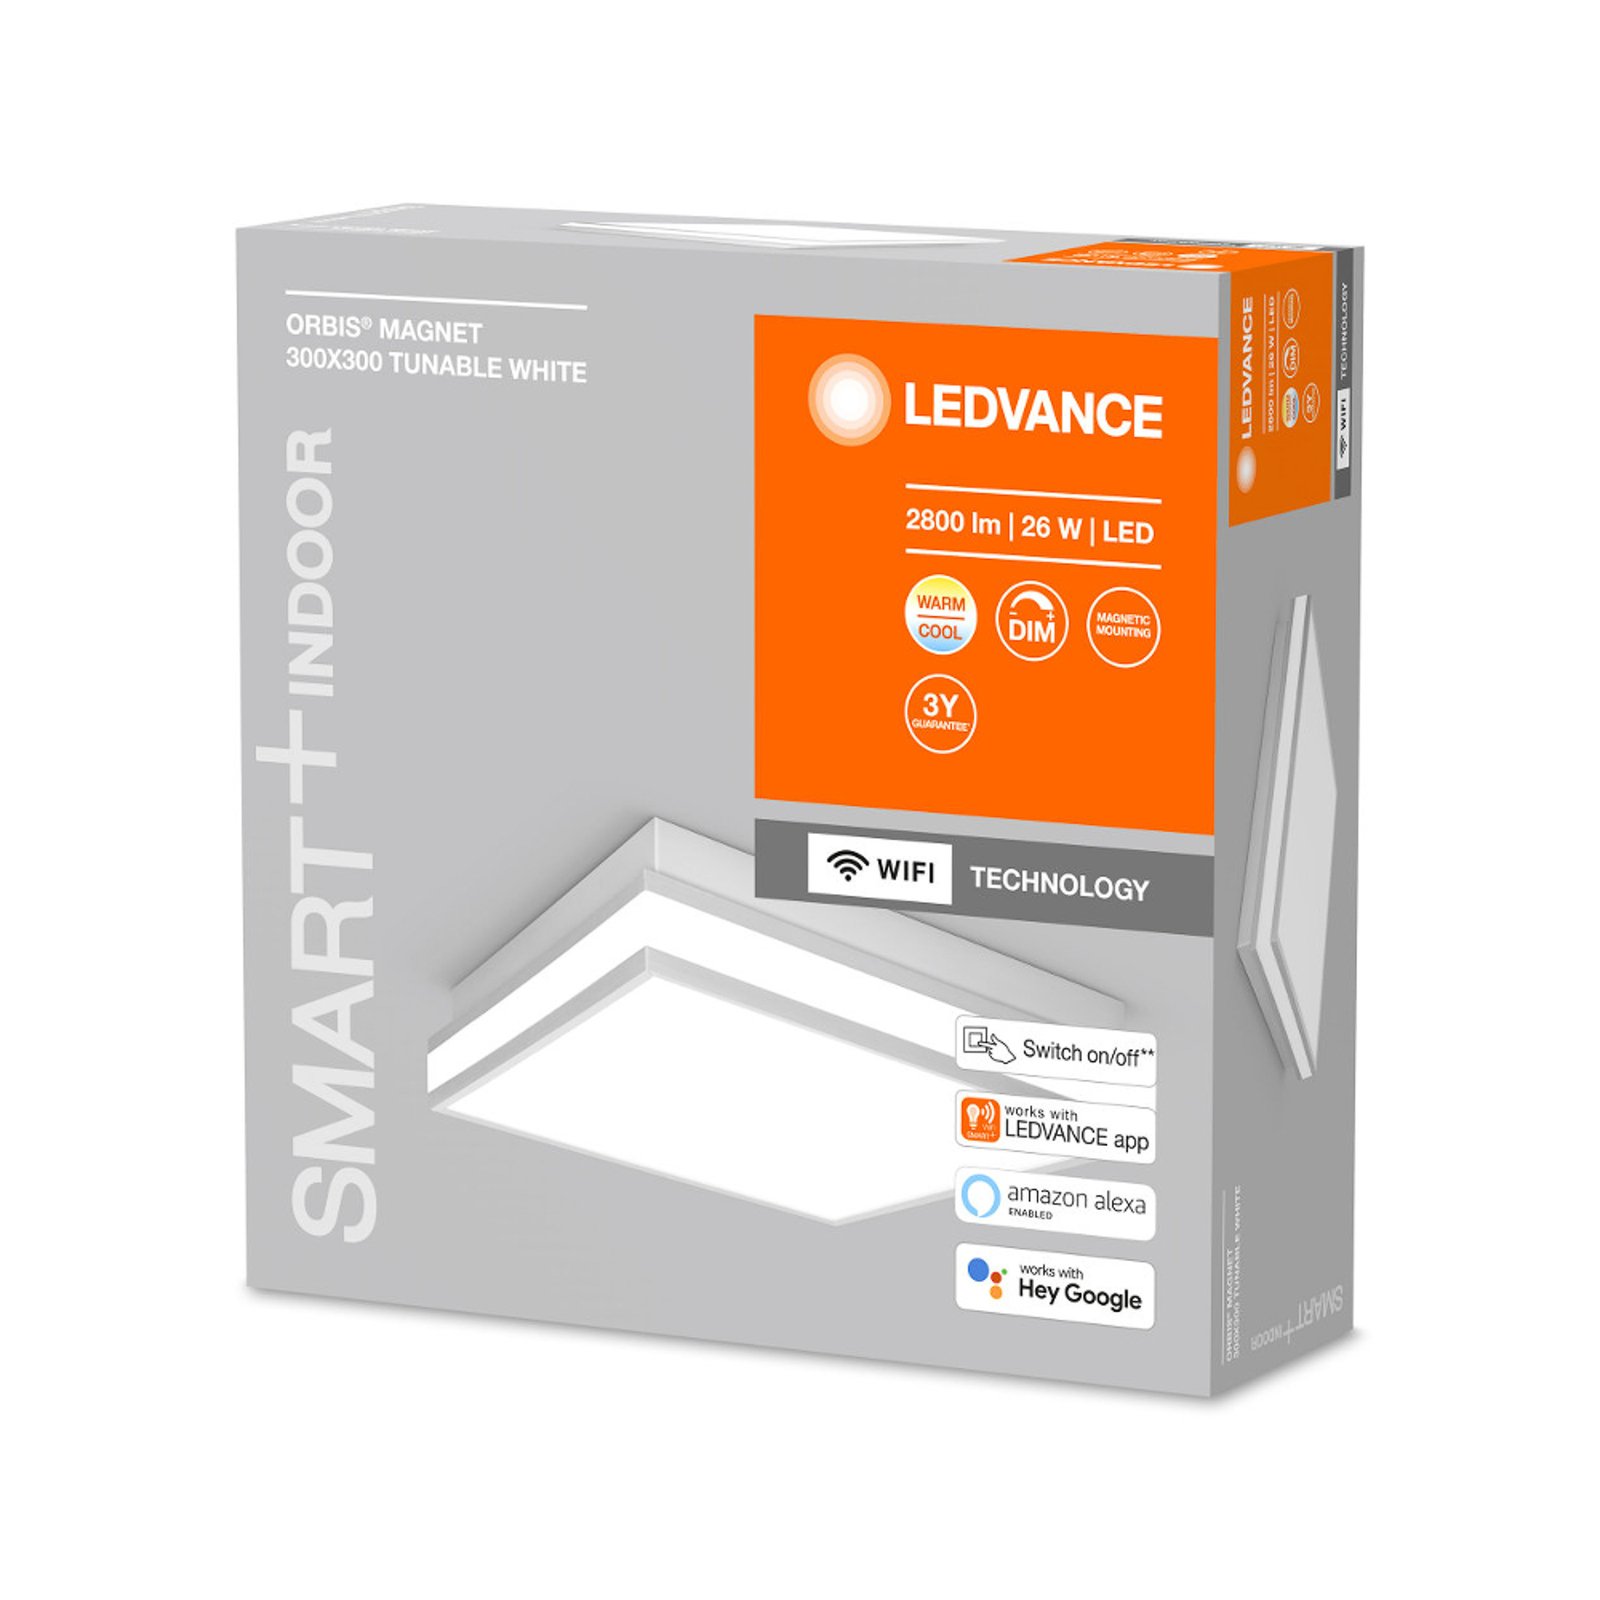 LEDVANCE SMART+ WiFi Orbis mágnes, szürke, 30x30cm